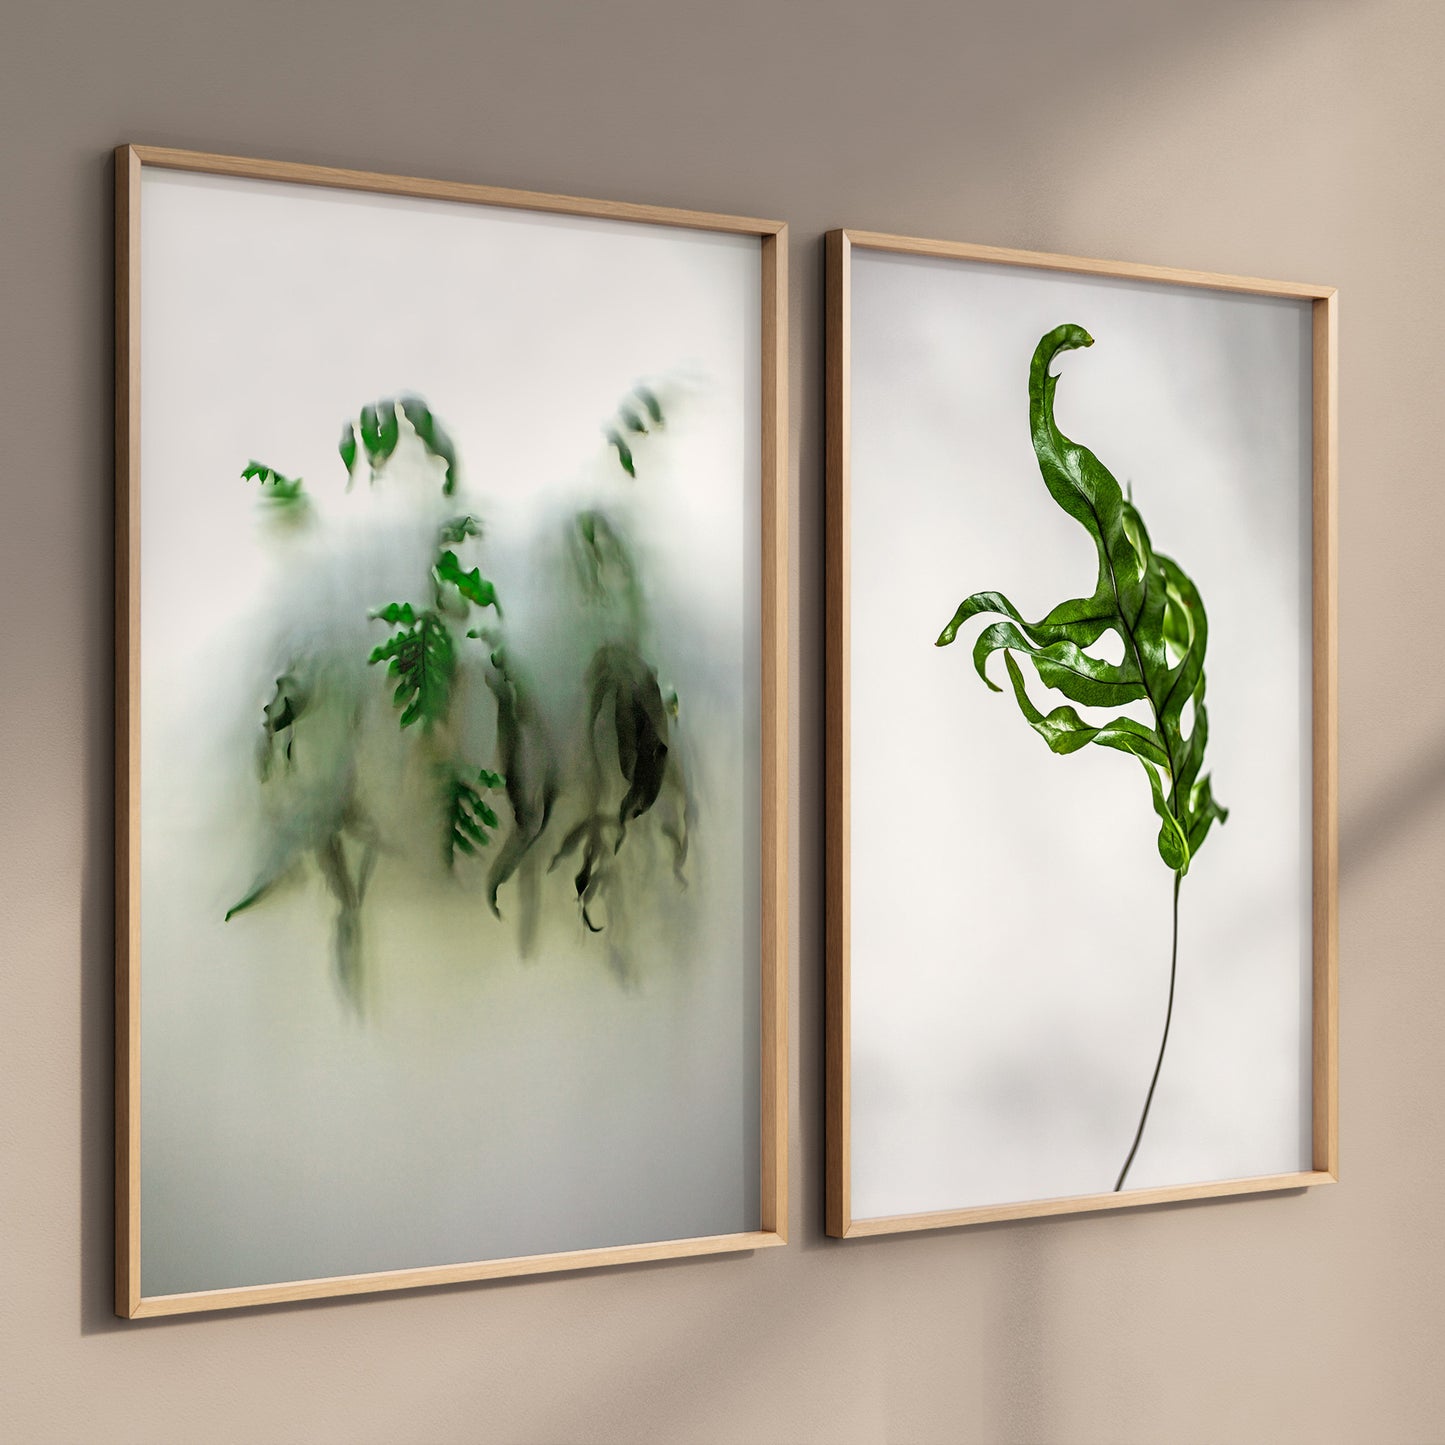 Botanic Still Life collection - hanging fern